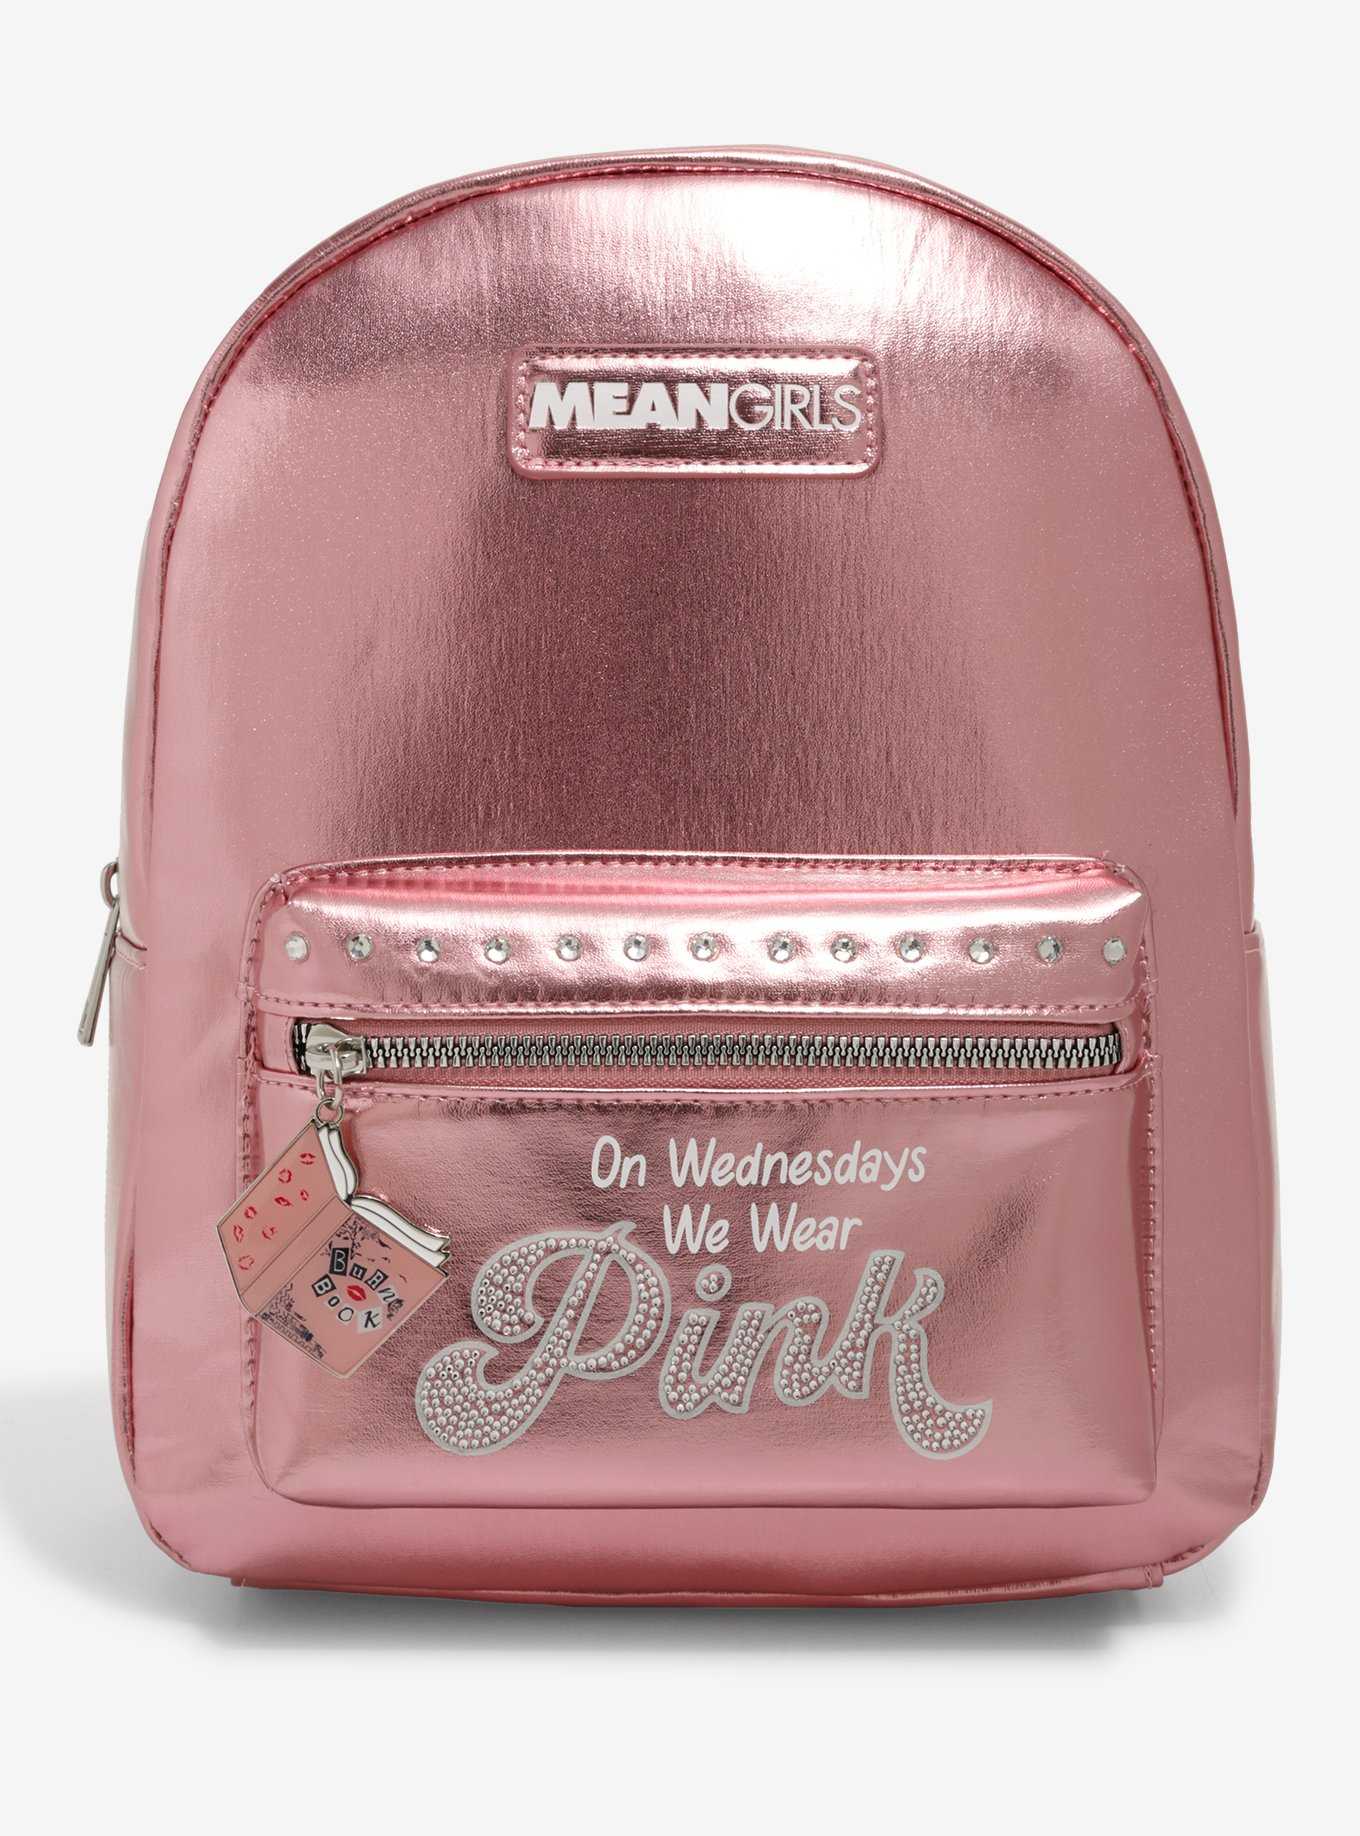 Mean Girls On Wednesdays We Wear Pink Metallic Mini Backpack, , hi-res